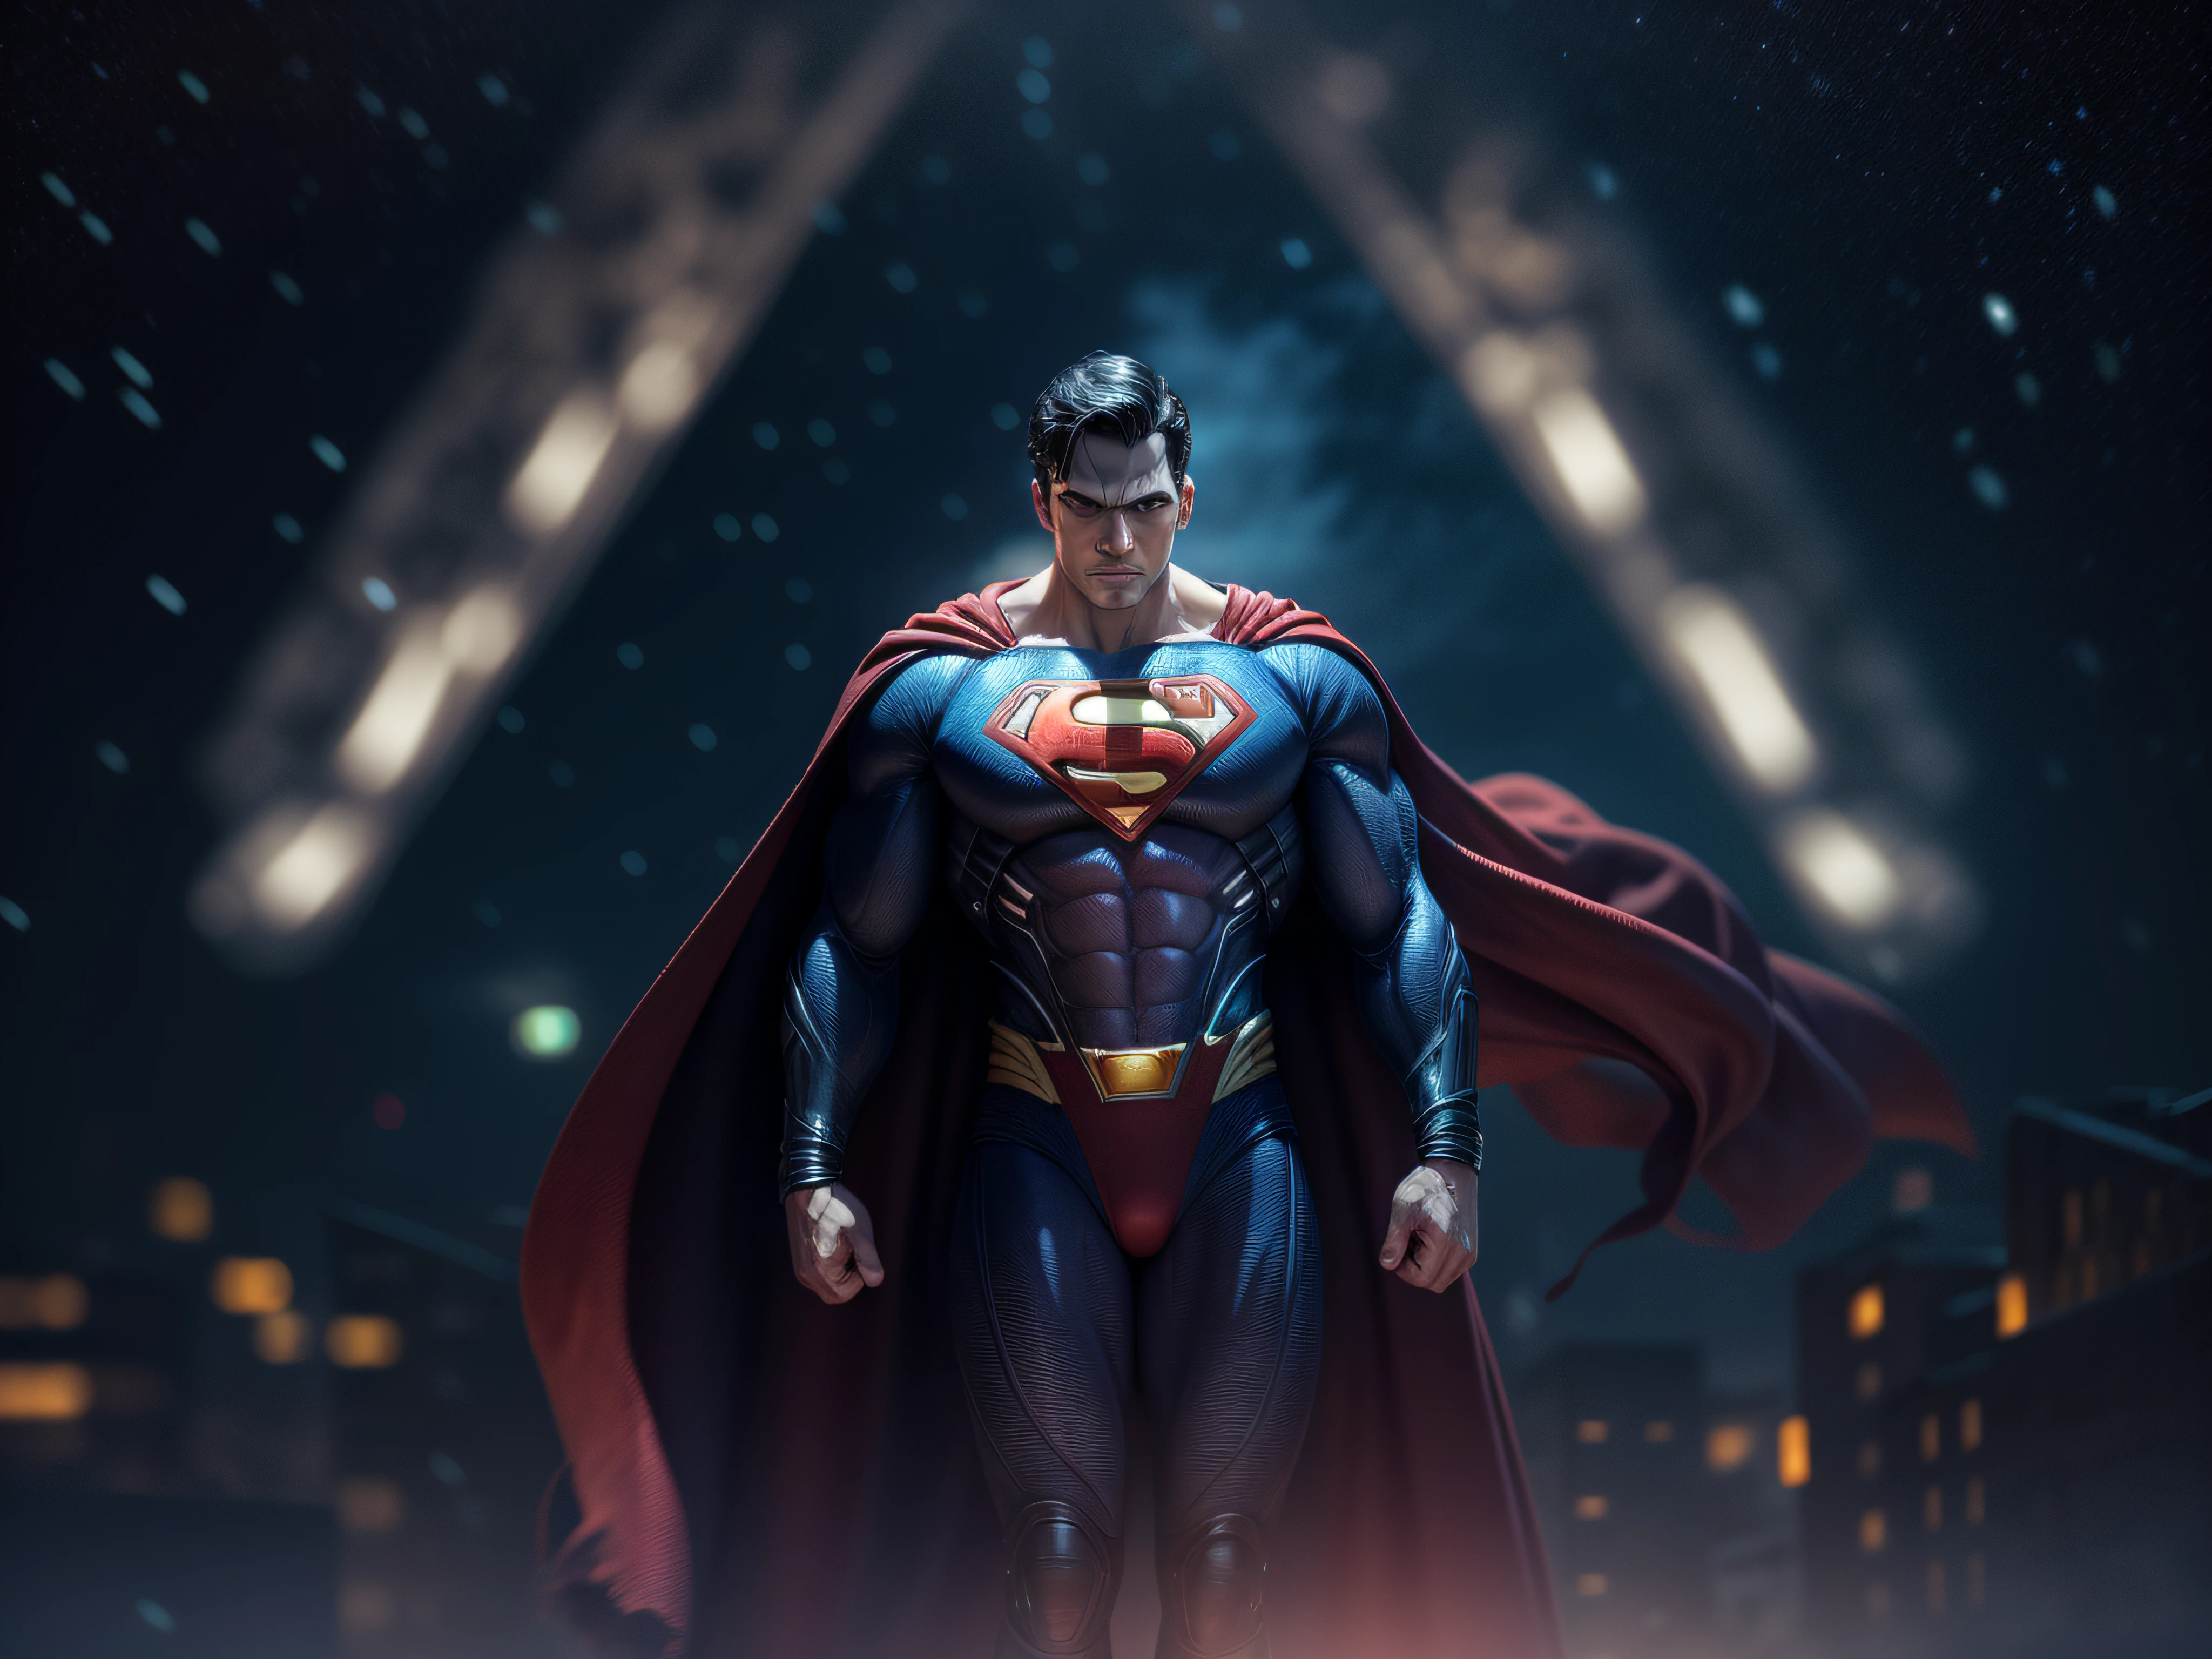 Close a powerful threat, Superman's imposing appearance, menacing stare, ricamente detalhado, Hiper realista, 3D-rendering, obra-prima, NVIDIA, RTX, ray-traced, Bokeh, Night sky with a huge and beautiful full moon, estrelas brilhando,